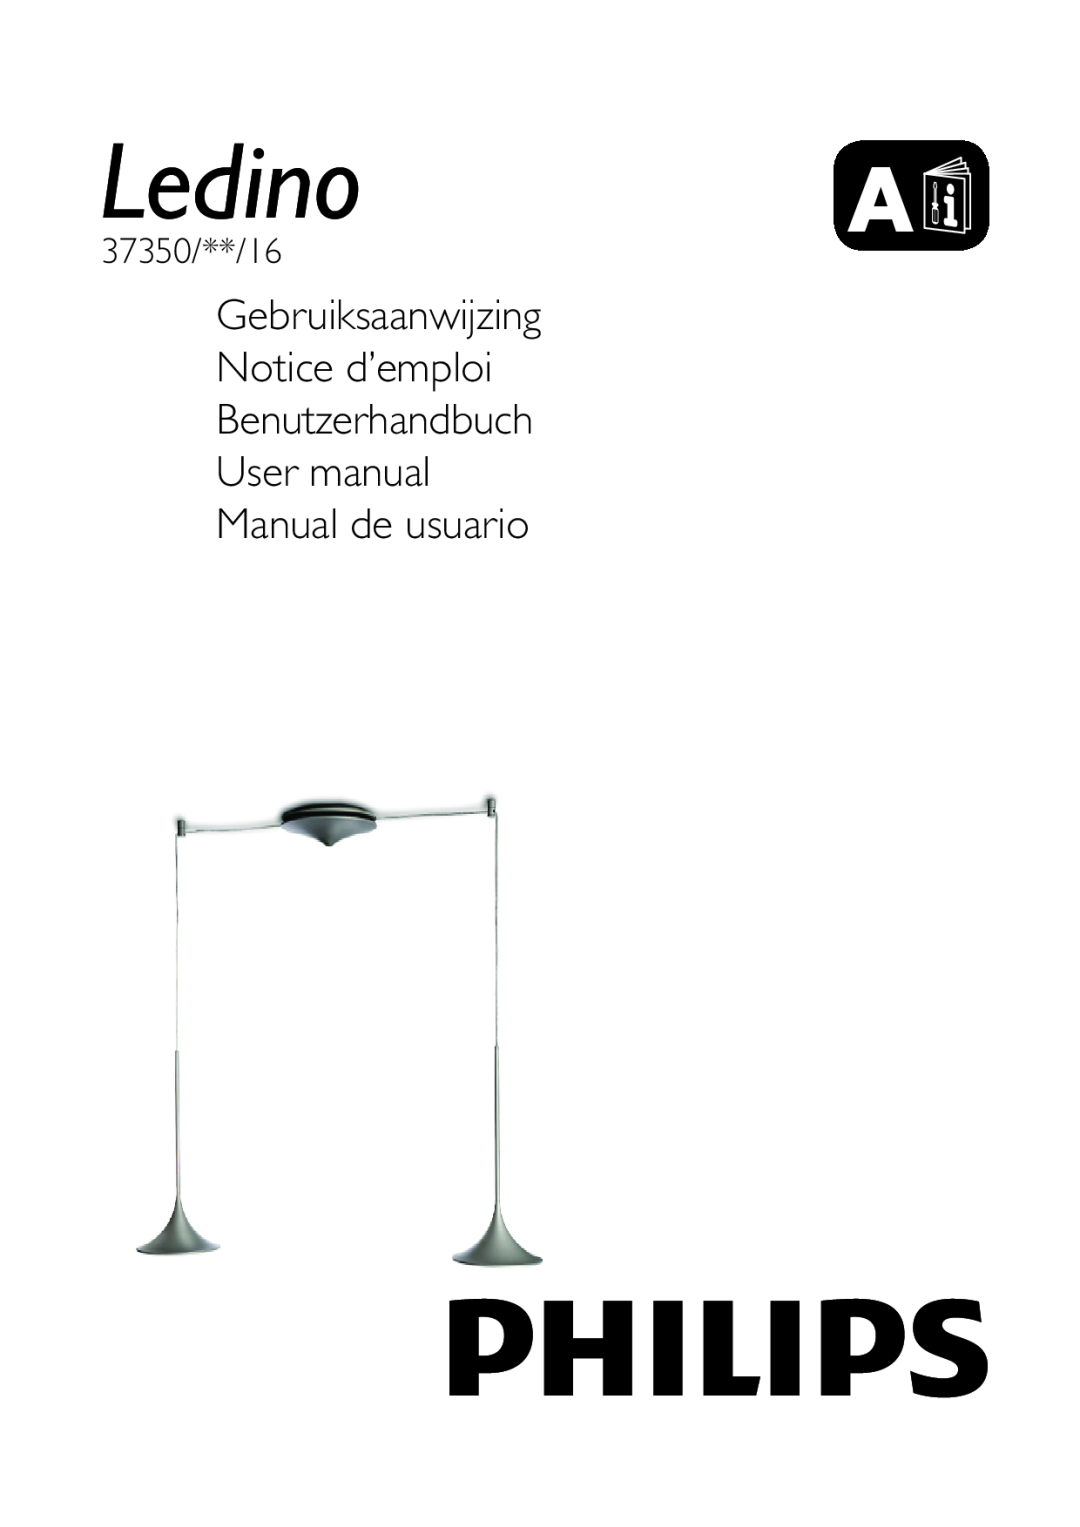 Philips 37350/31/16 user manual Gebruiksaanwijzing Notice d’emploi, Benutzerhandbuch User manual Manual de usuario, Ledino 